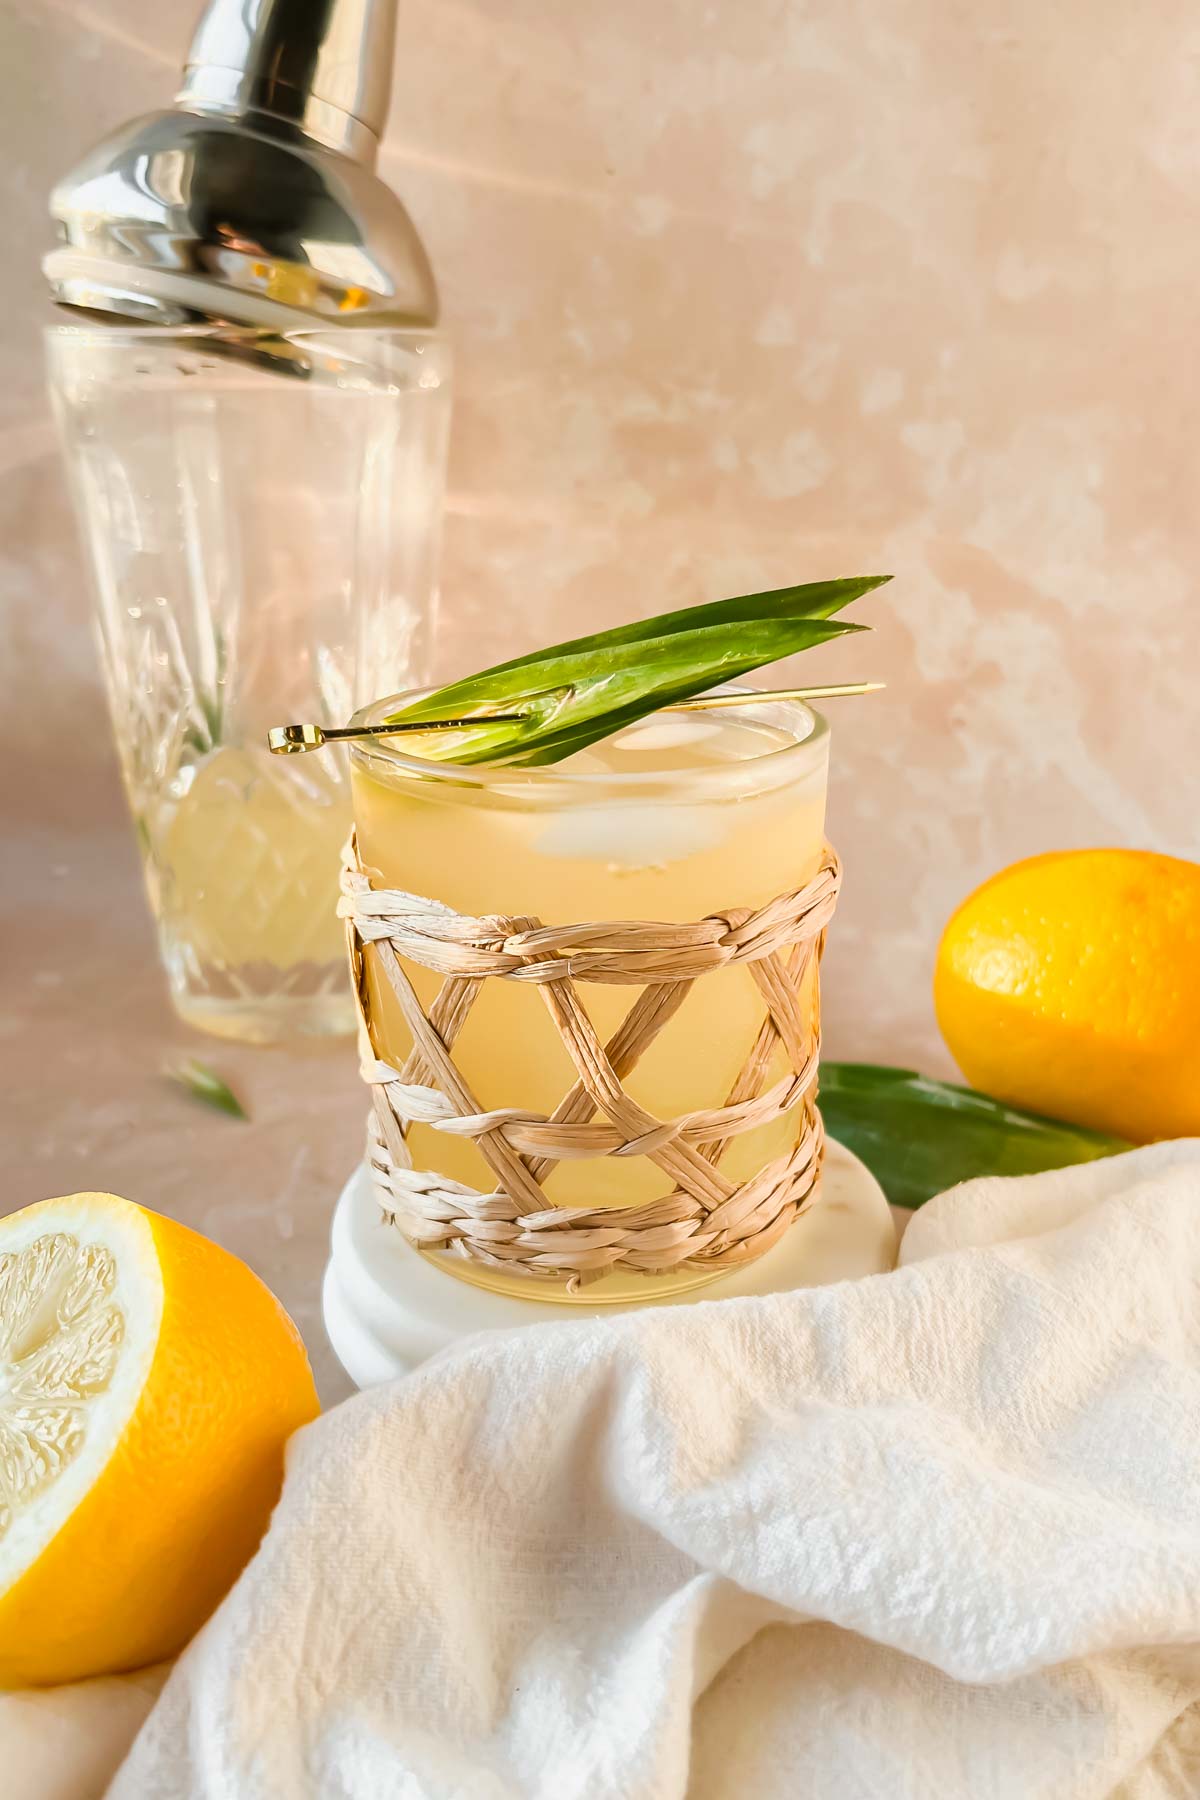 irish lemonade garnished with pineapple leaves on gold skewer.